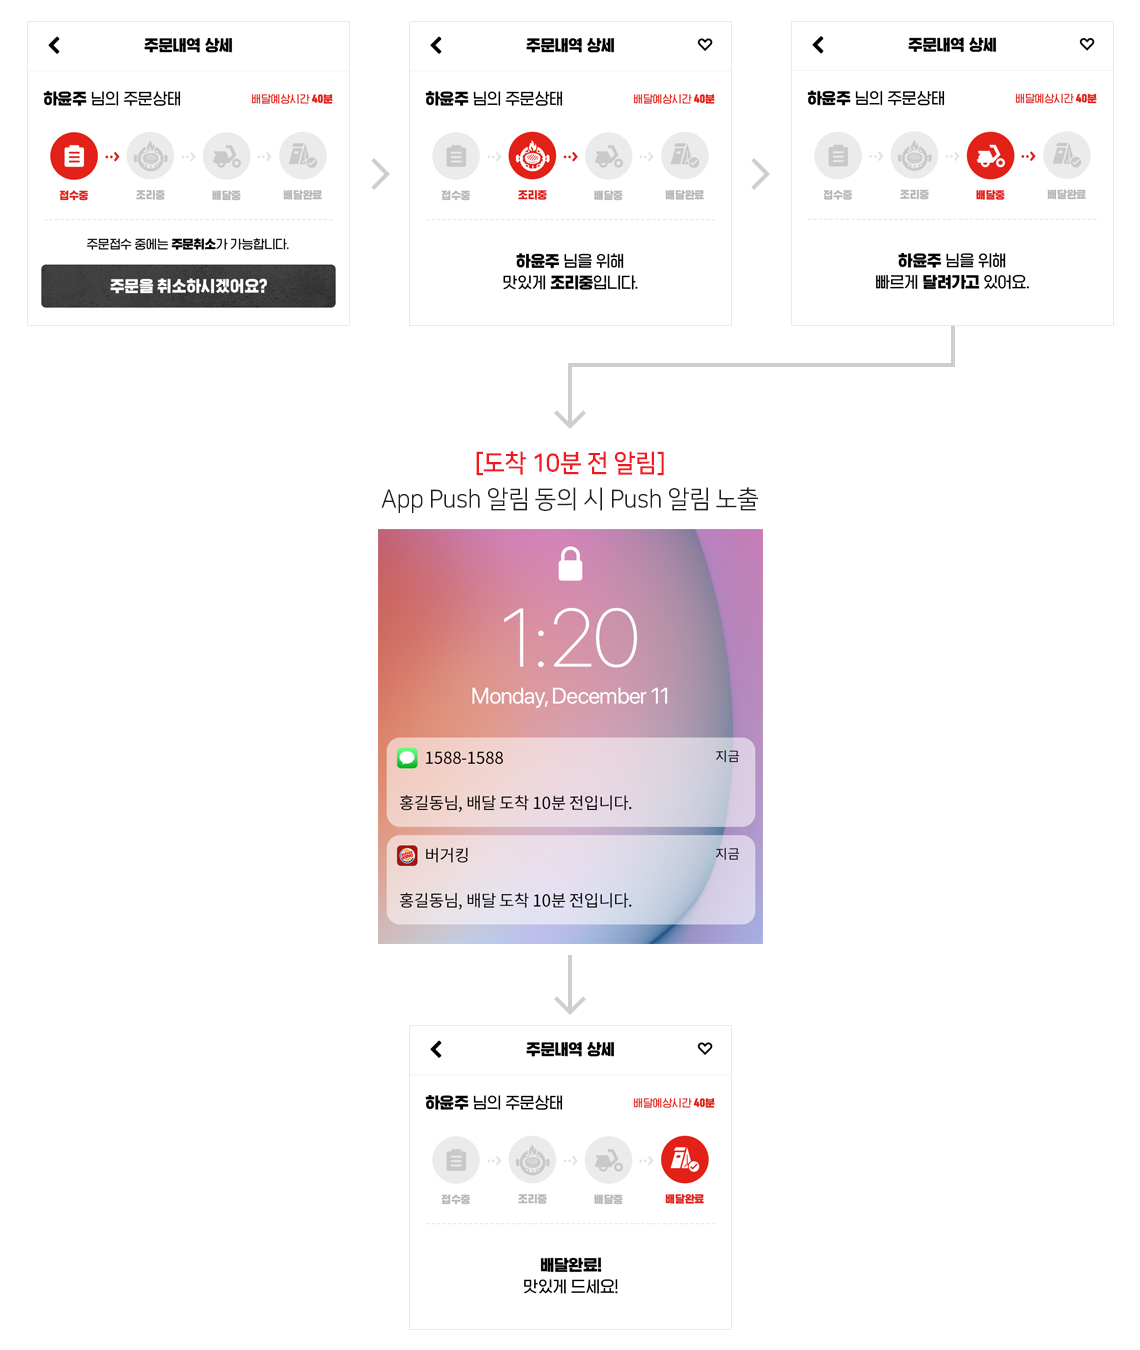 BURGER KING Korea Omni-channel: Responsive Web, Mobile App, and KIOSK UX/UI GUI Design - Delivery status